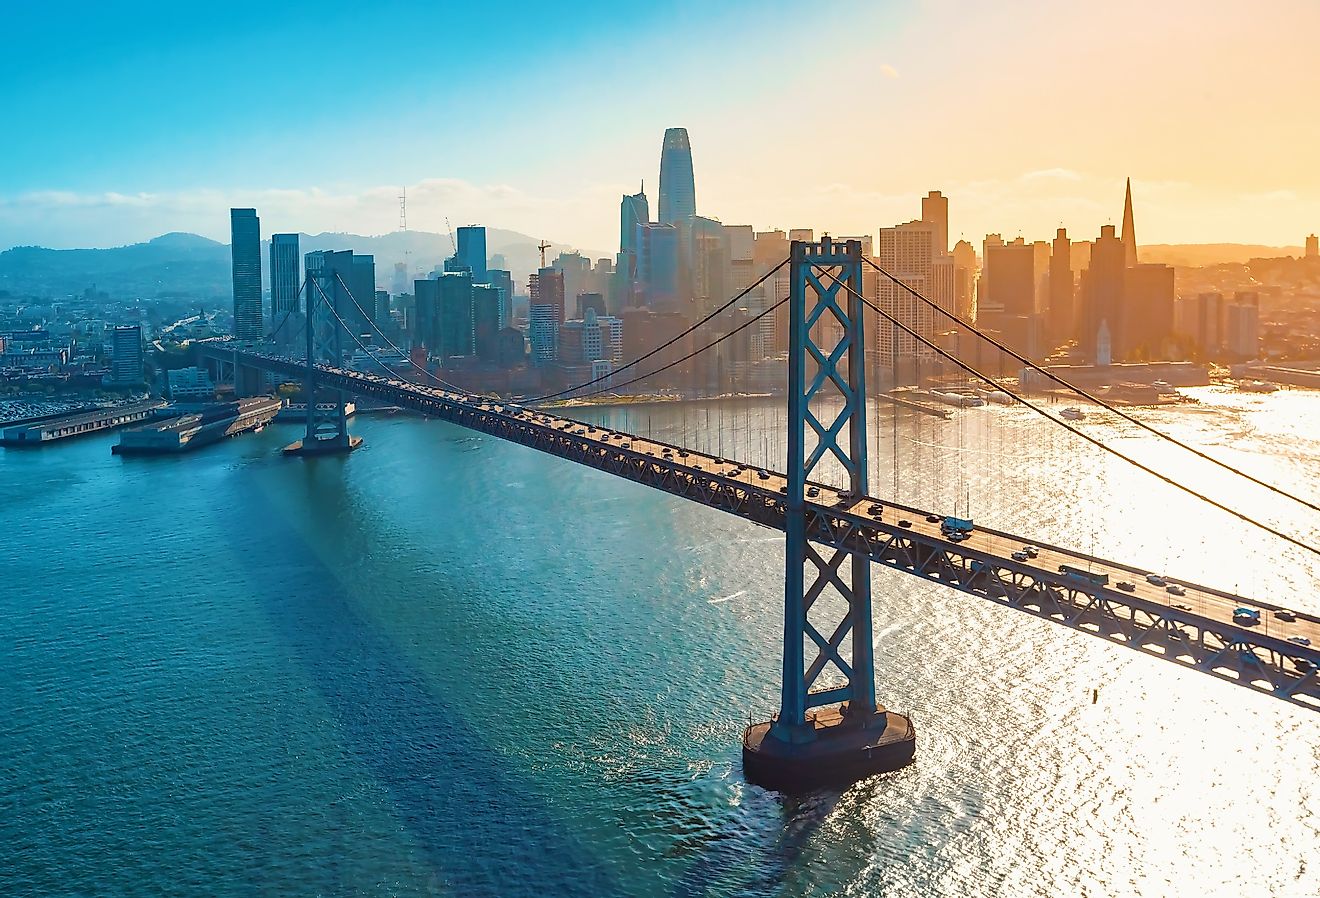 Aerial view of the Bay Bridge in San Francisco, California.